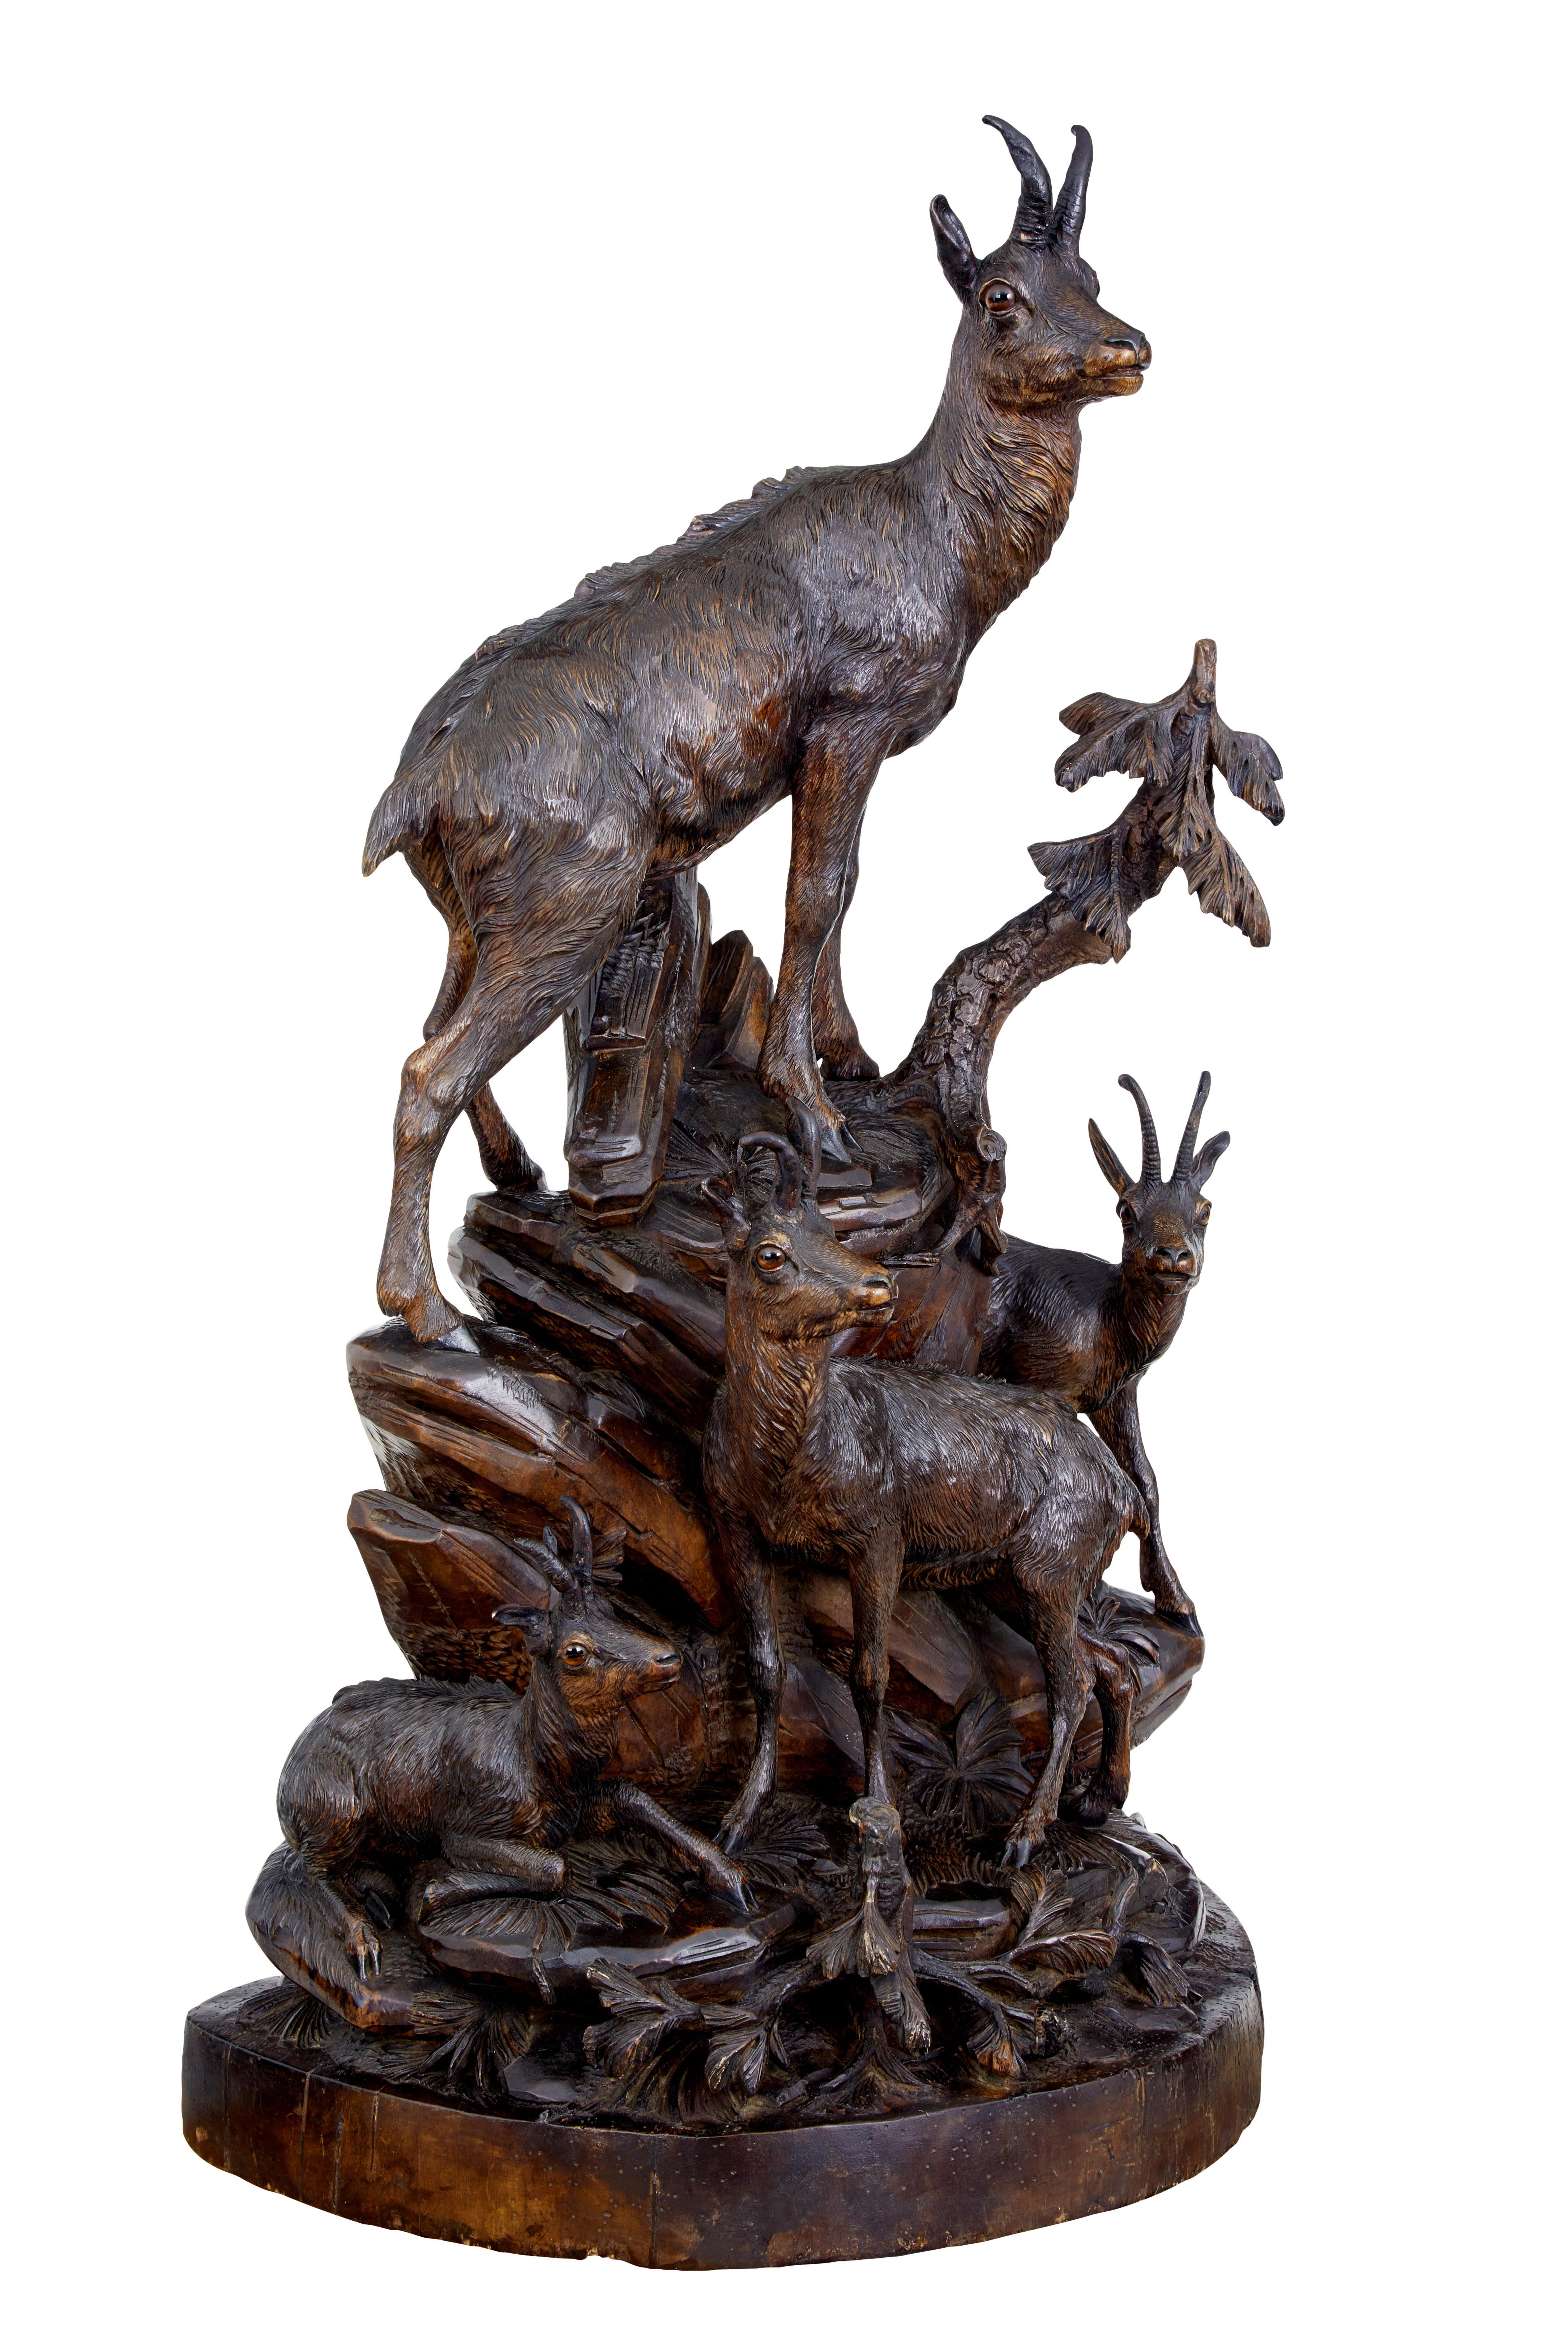 Black Forest 19th century carved black forest ibex sculpture linden wood For Sale